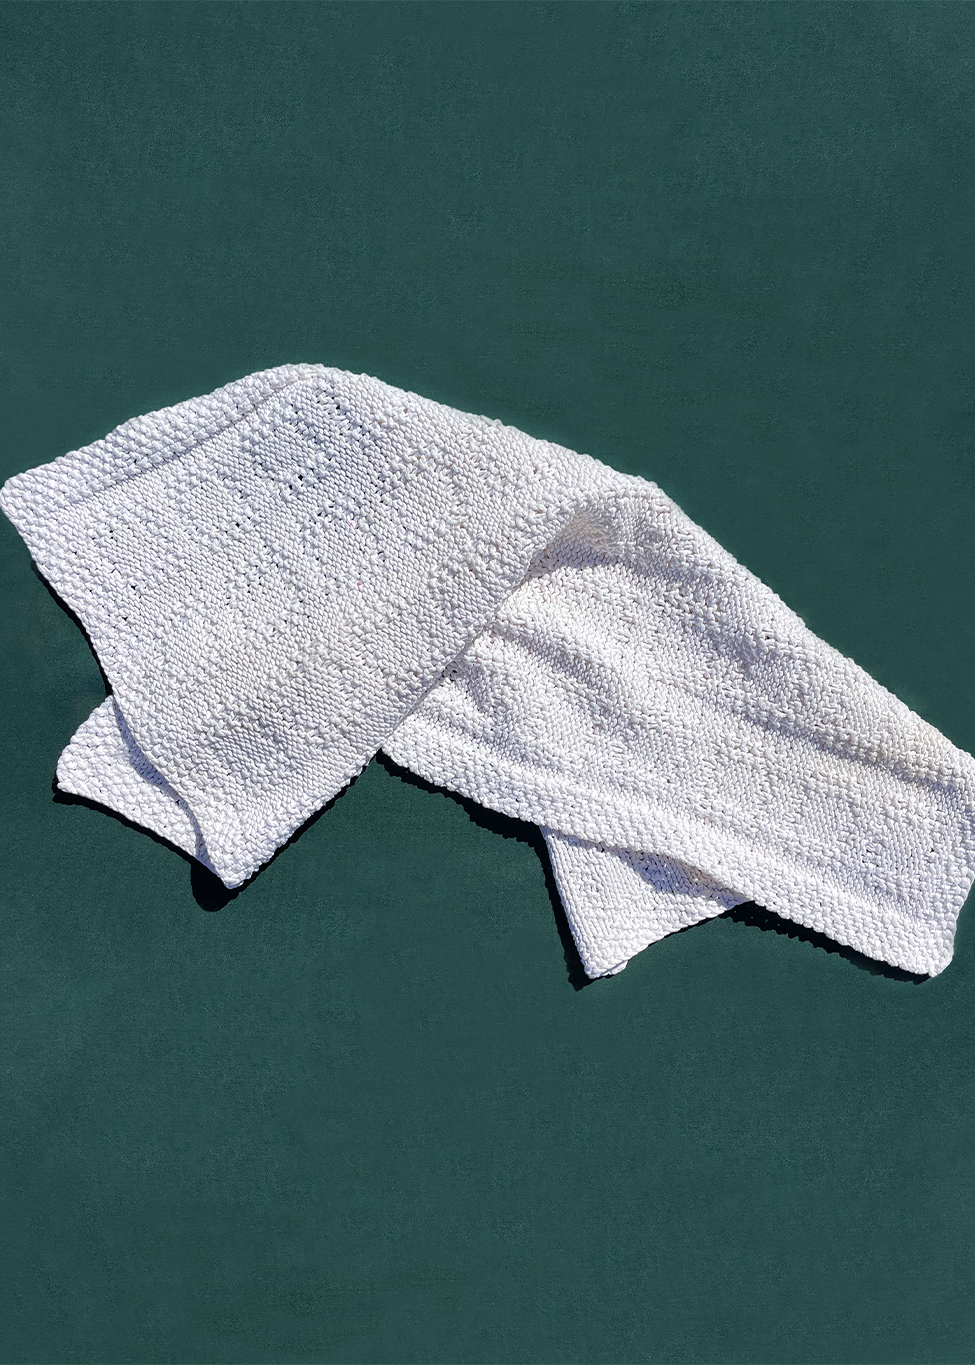 Hand knit towel